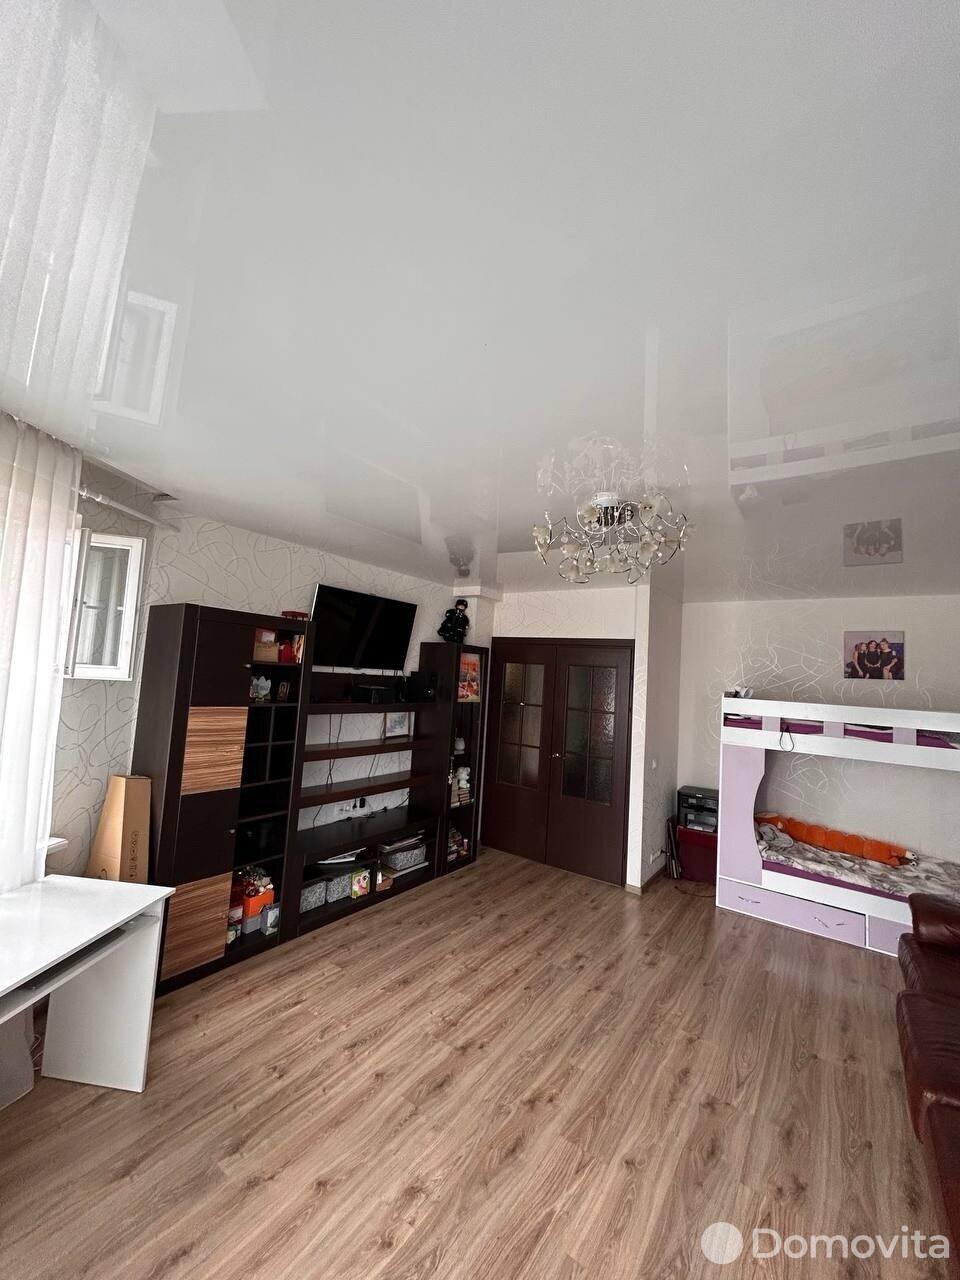 квартира, Минск, ул. Пимена Панченко, д. 62, стоимость продажи 282 490 р.